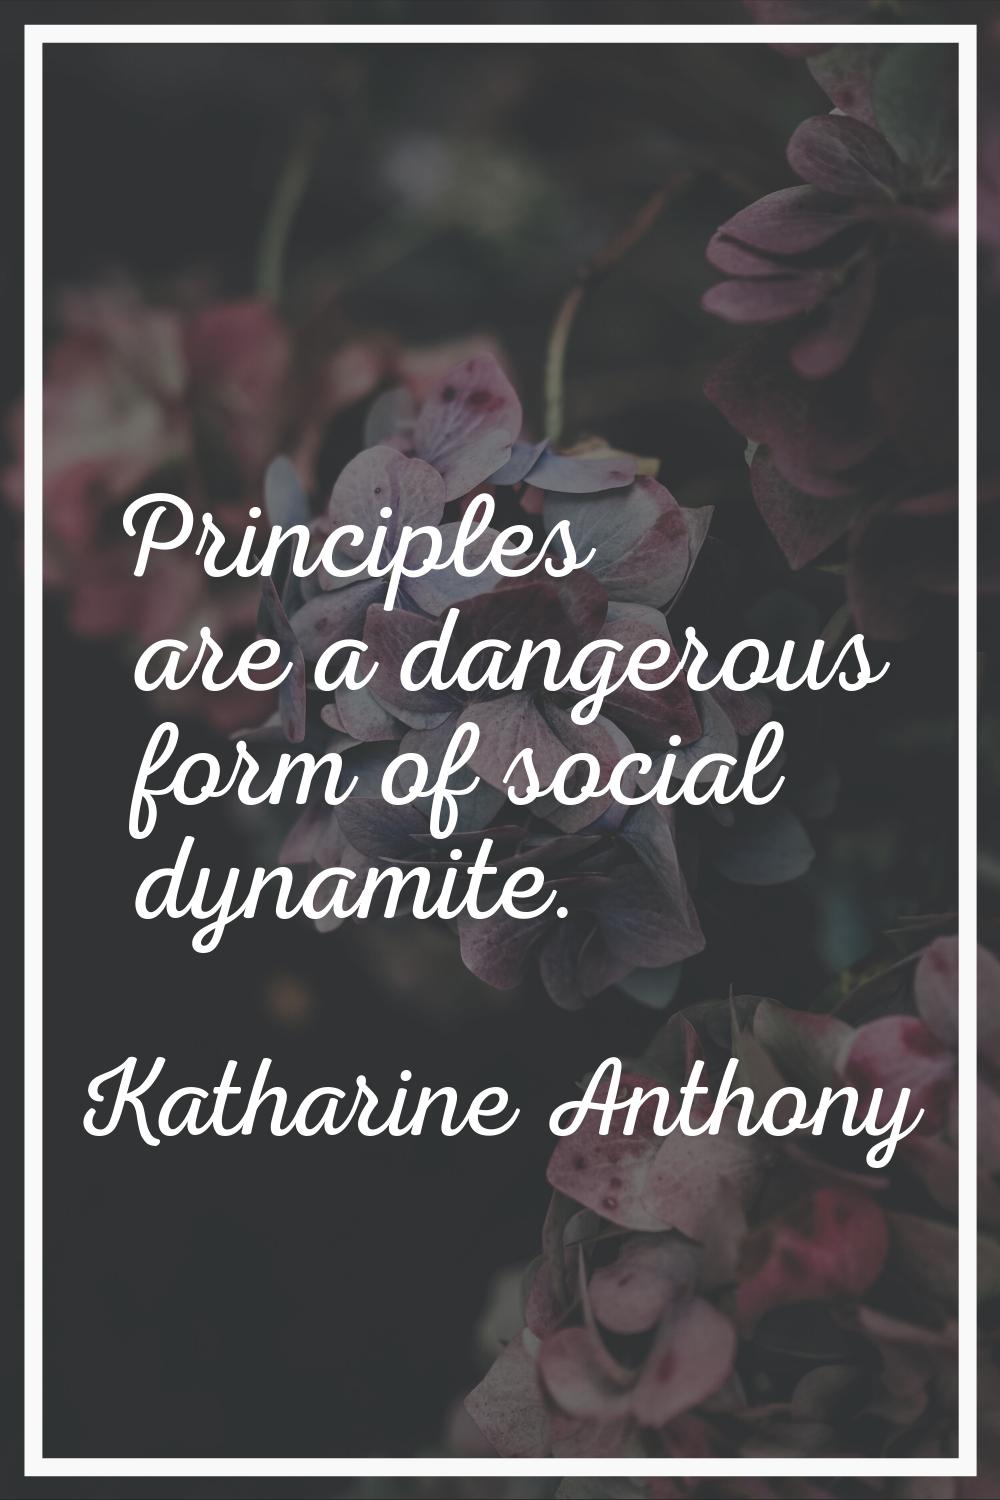 Principles are a dangerous form of social dynamite.